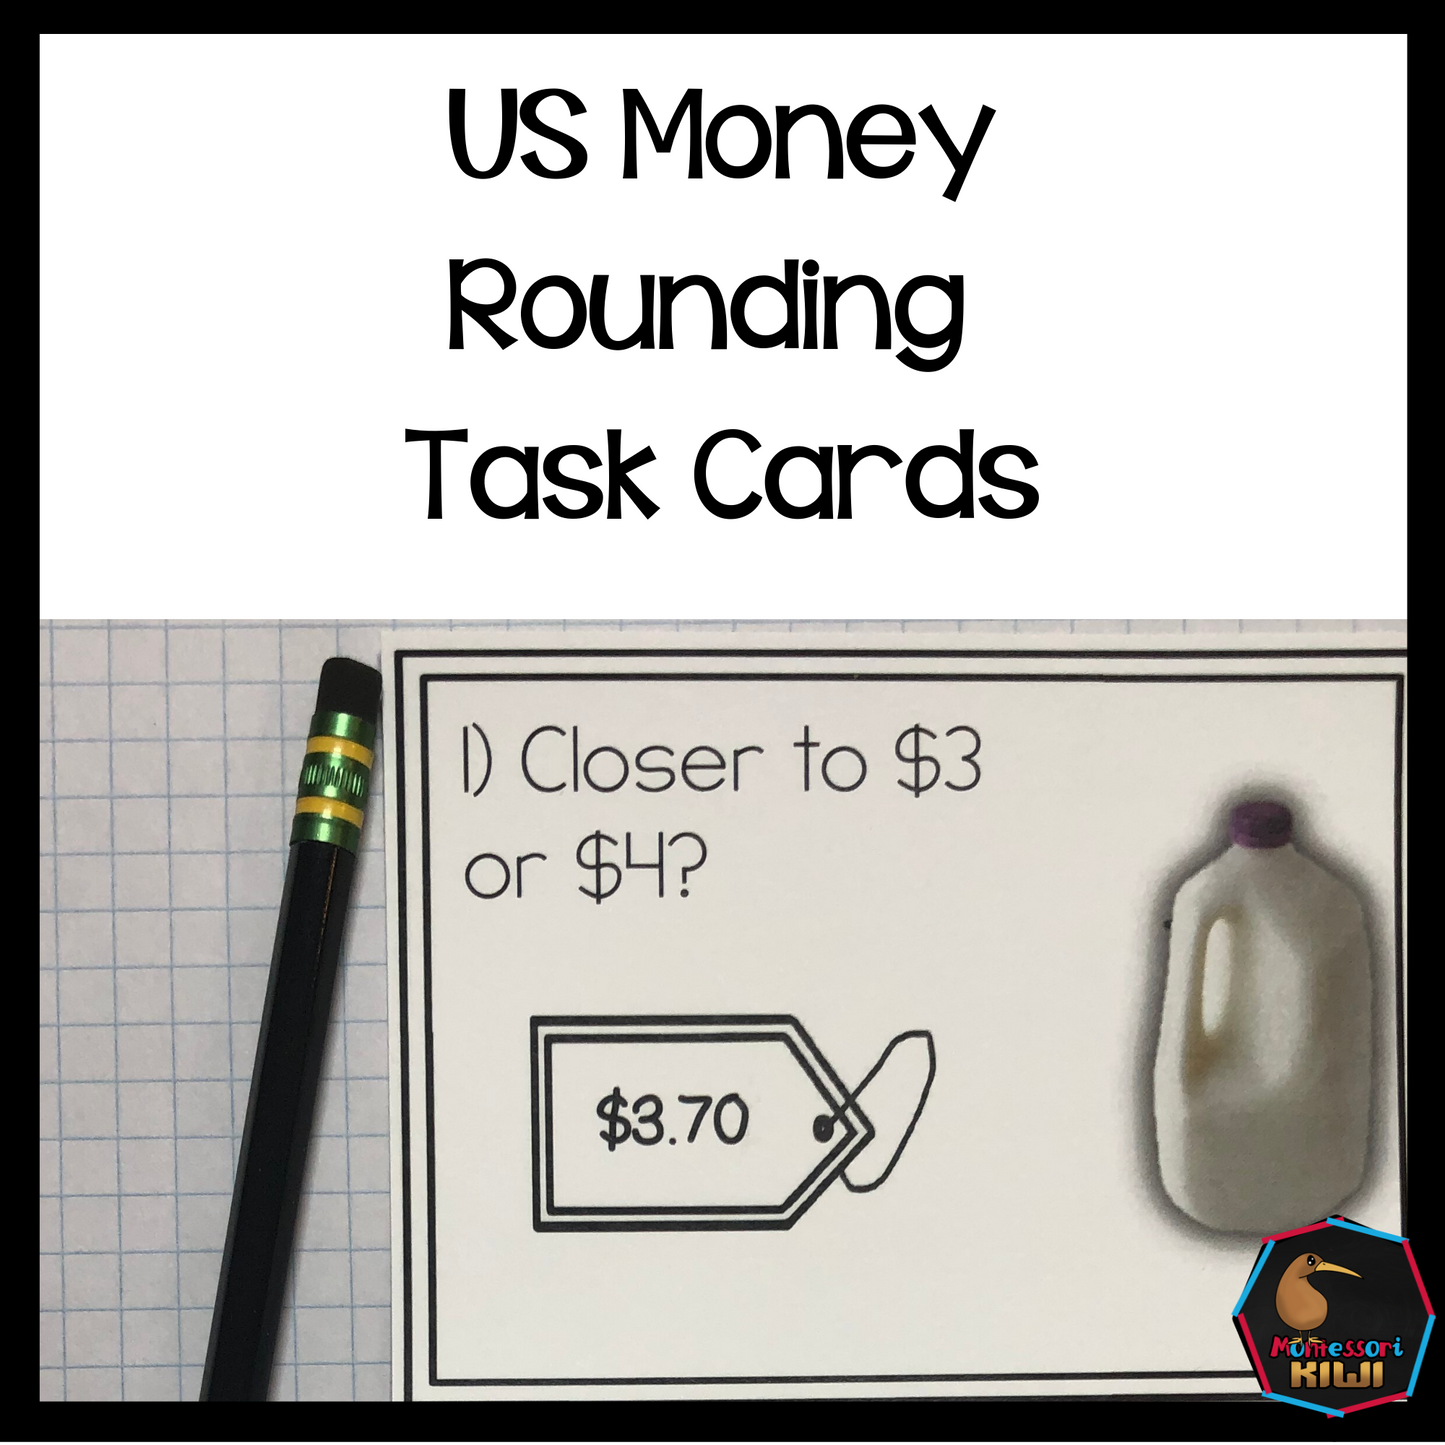 US Money Rounding Task Cards - montessorikiwi